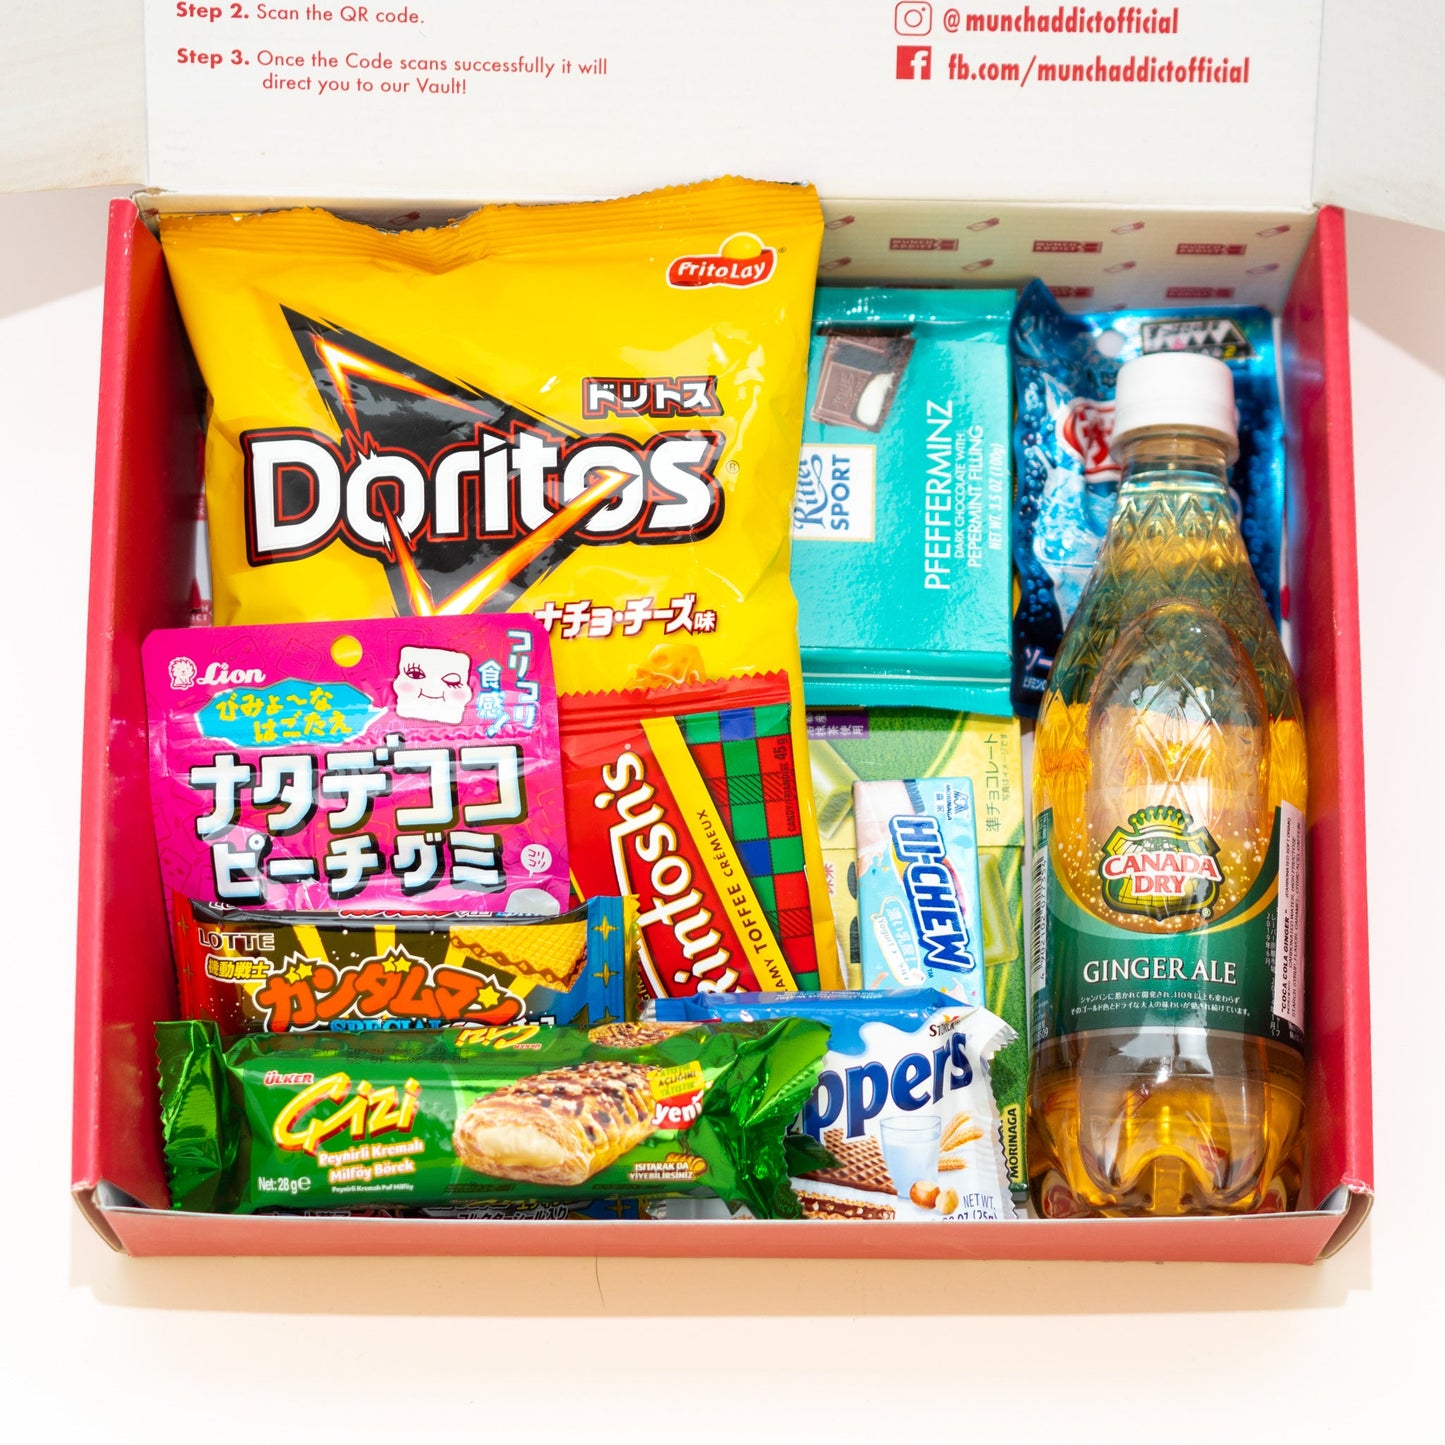 Standard Munch Box (5-7 Snacks)